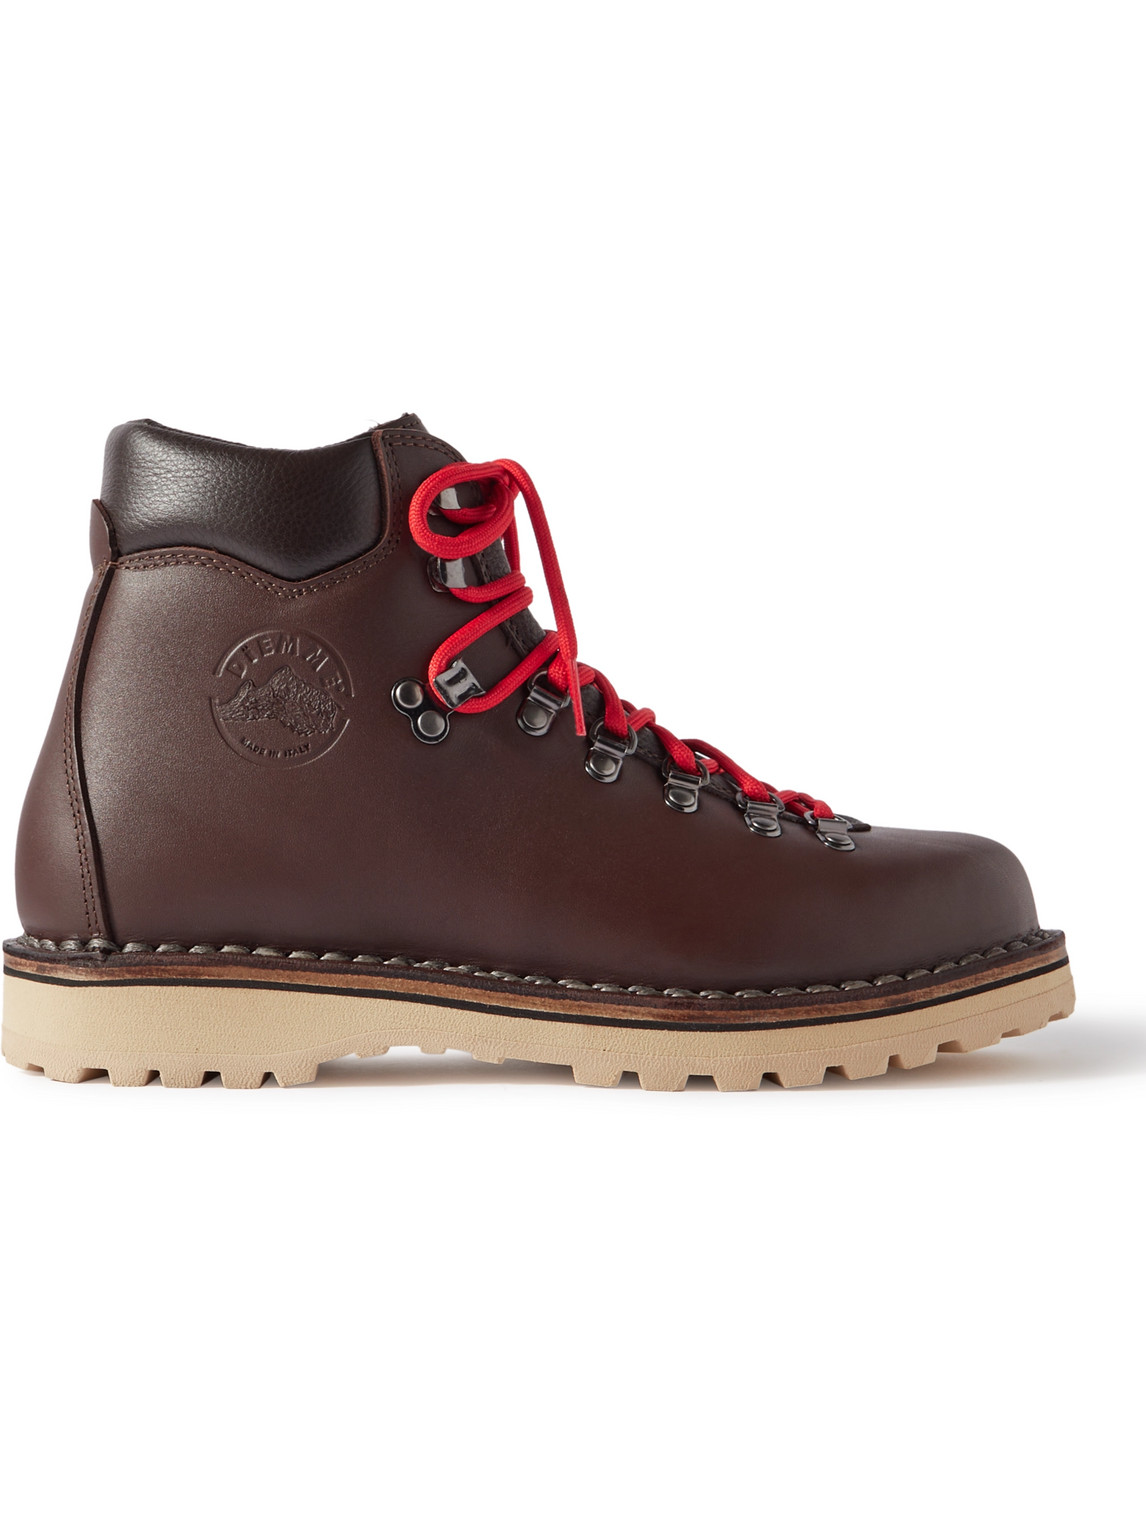 Diemme - Roccia Vet Leather Hiking Boots - Men - Brown - EU 43 von Diemme